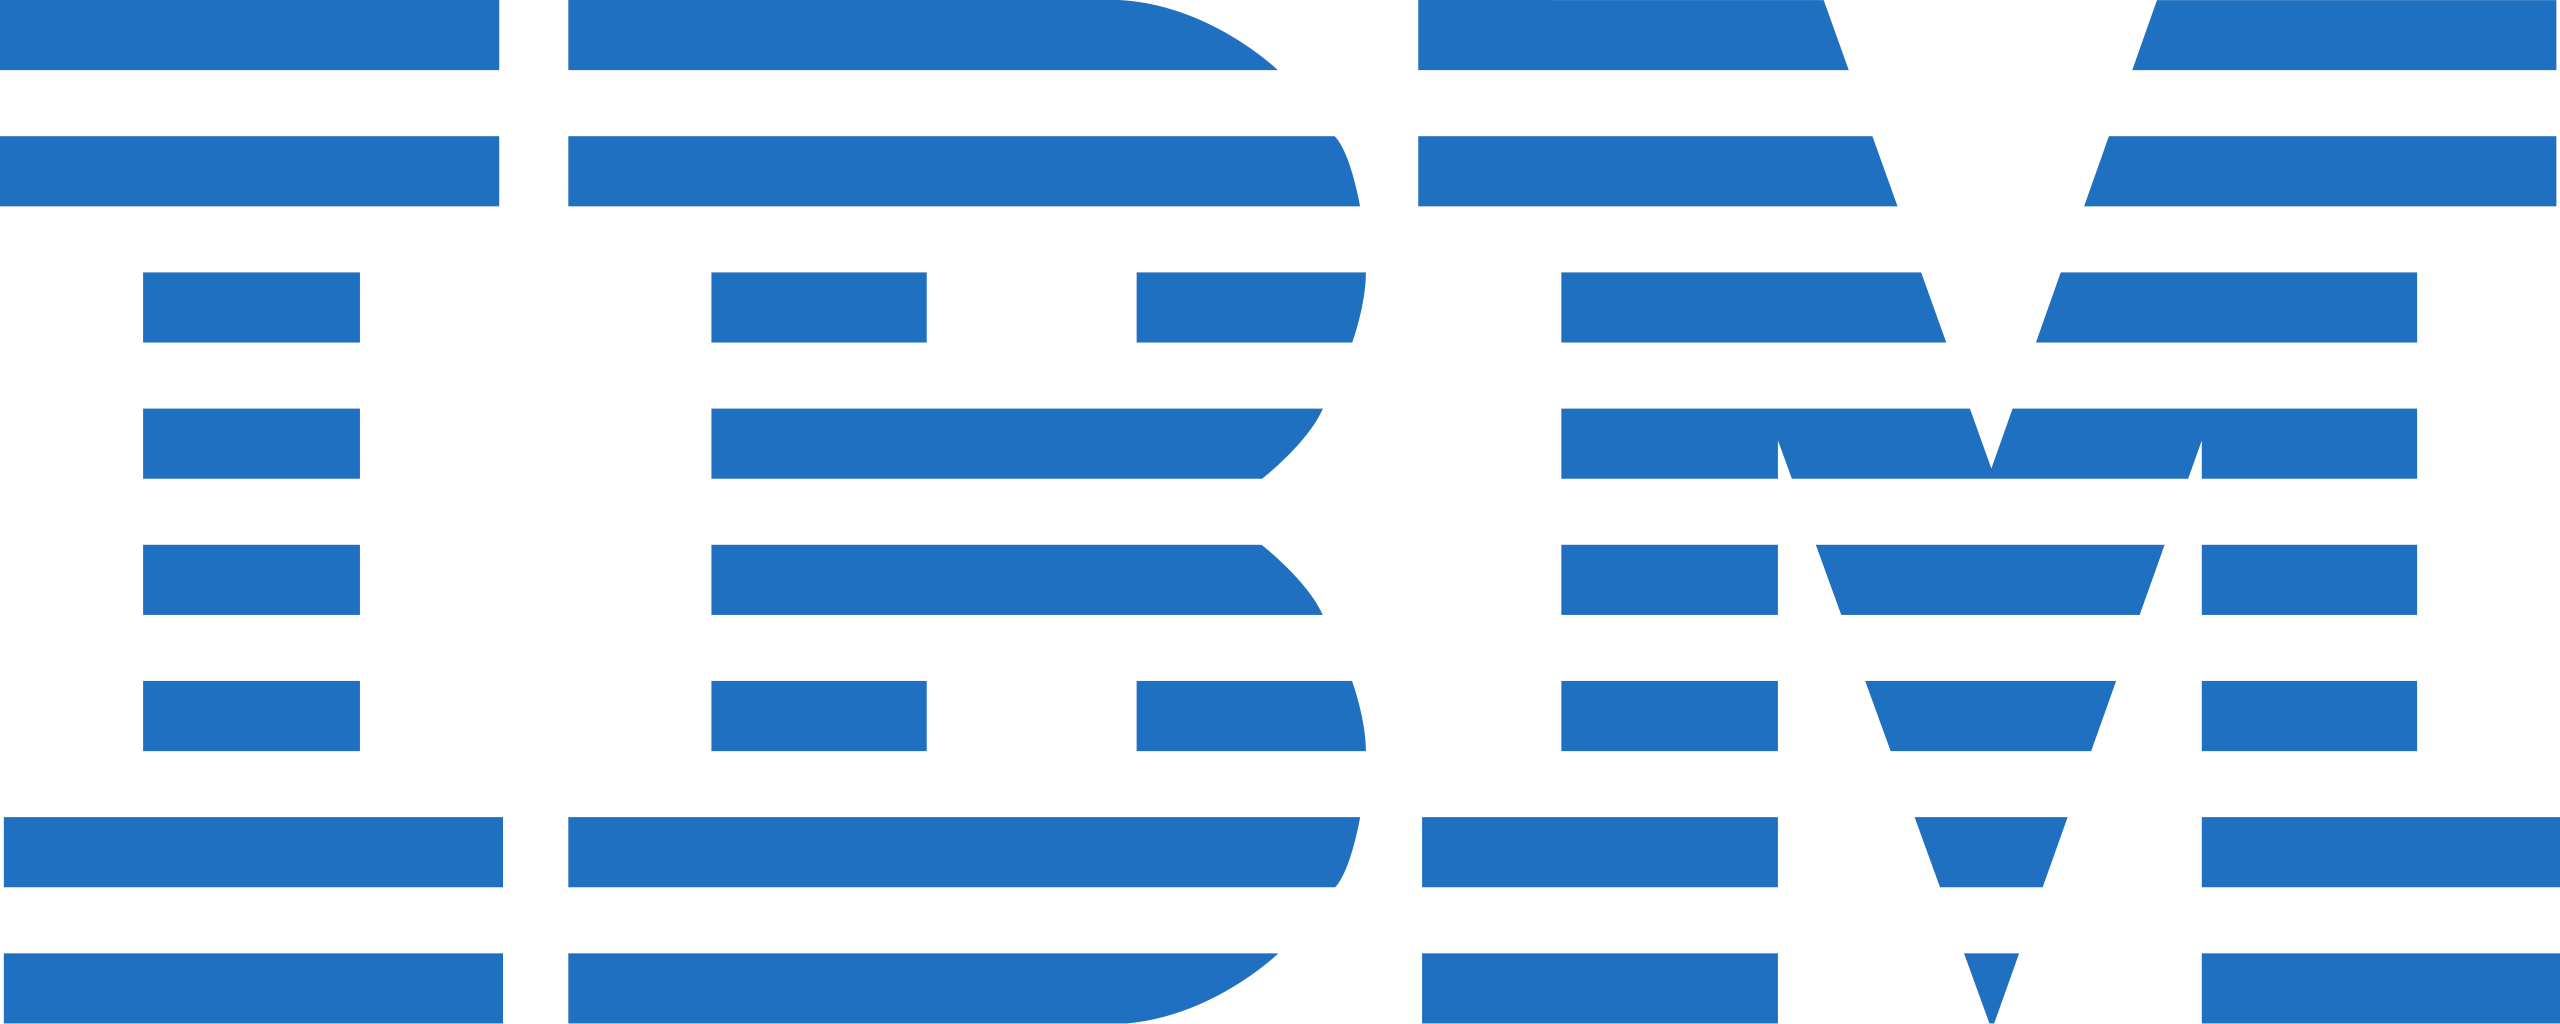 IBM Data and AI